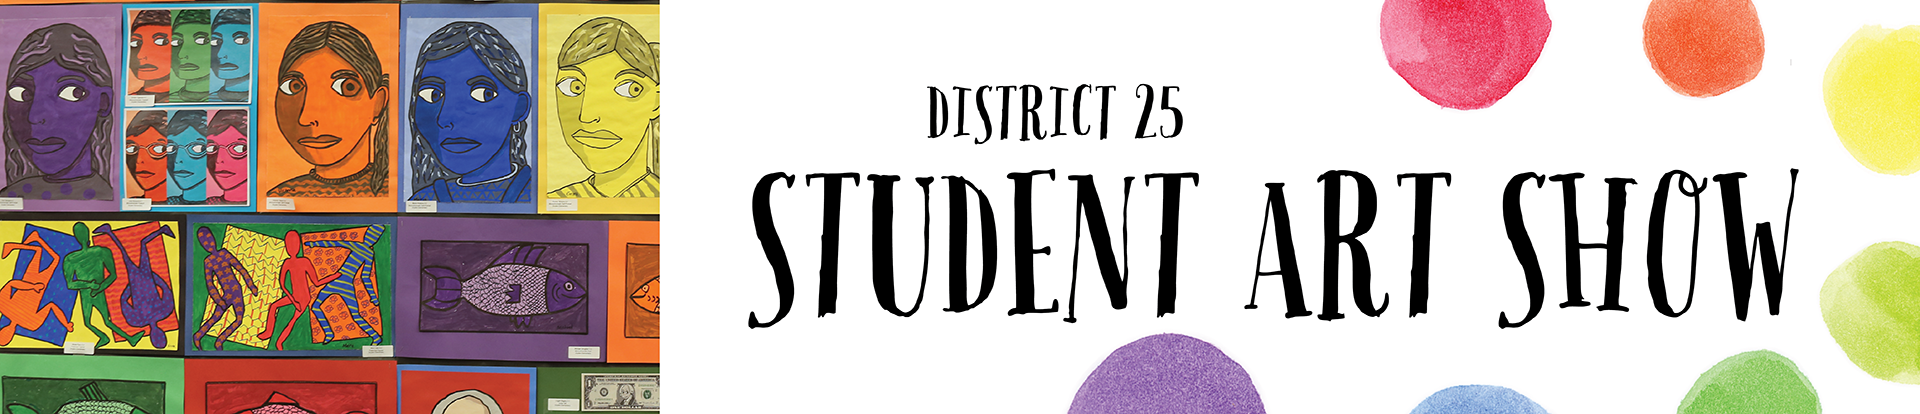 District 25 Student Art Show